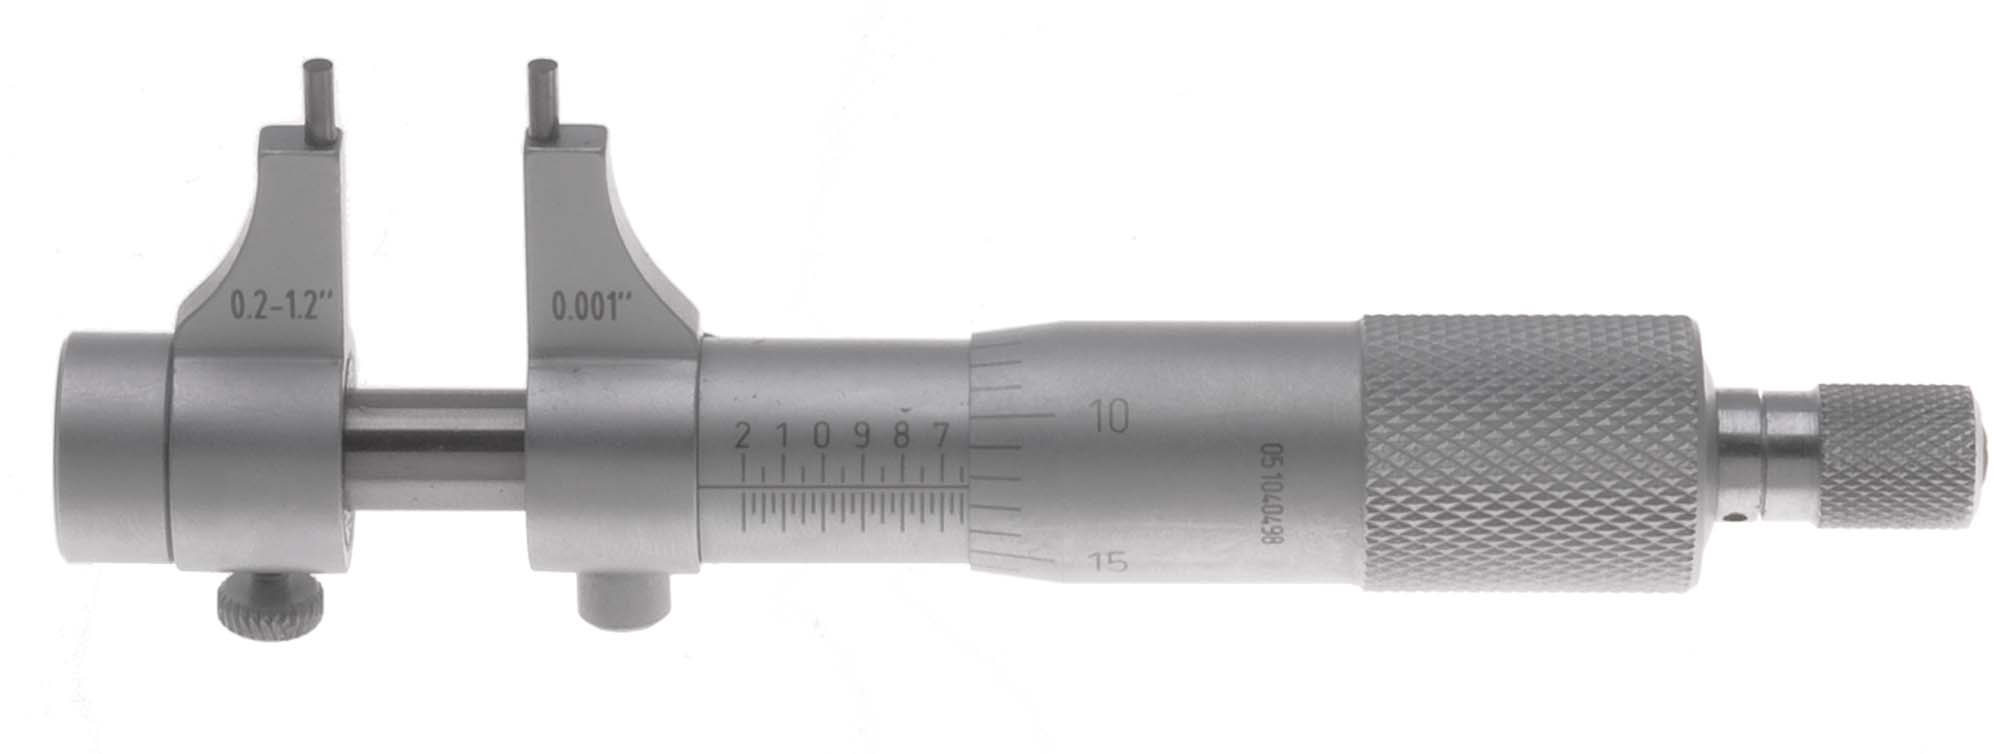 1" - 2" VME Inside Micrometer